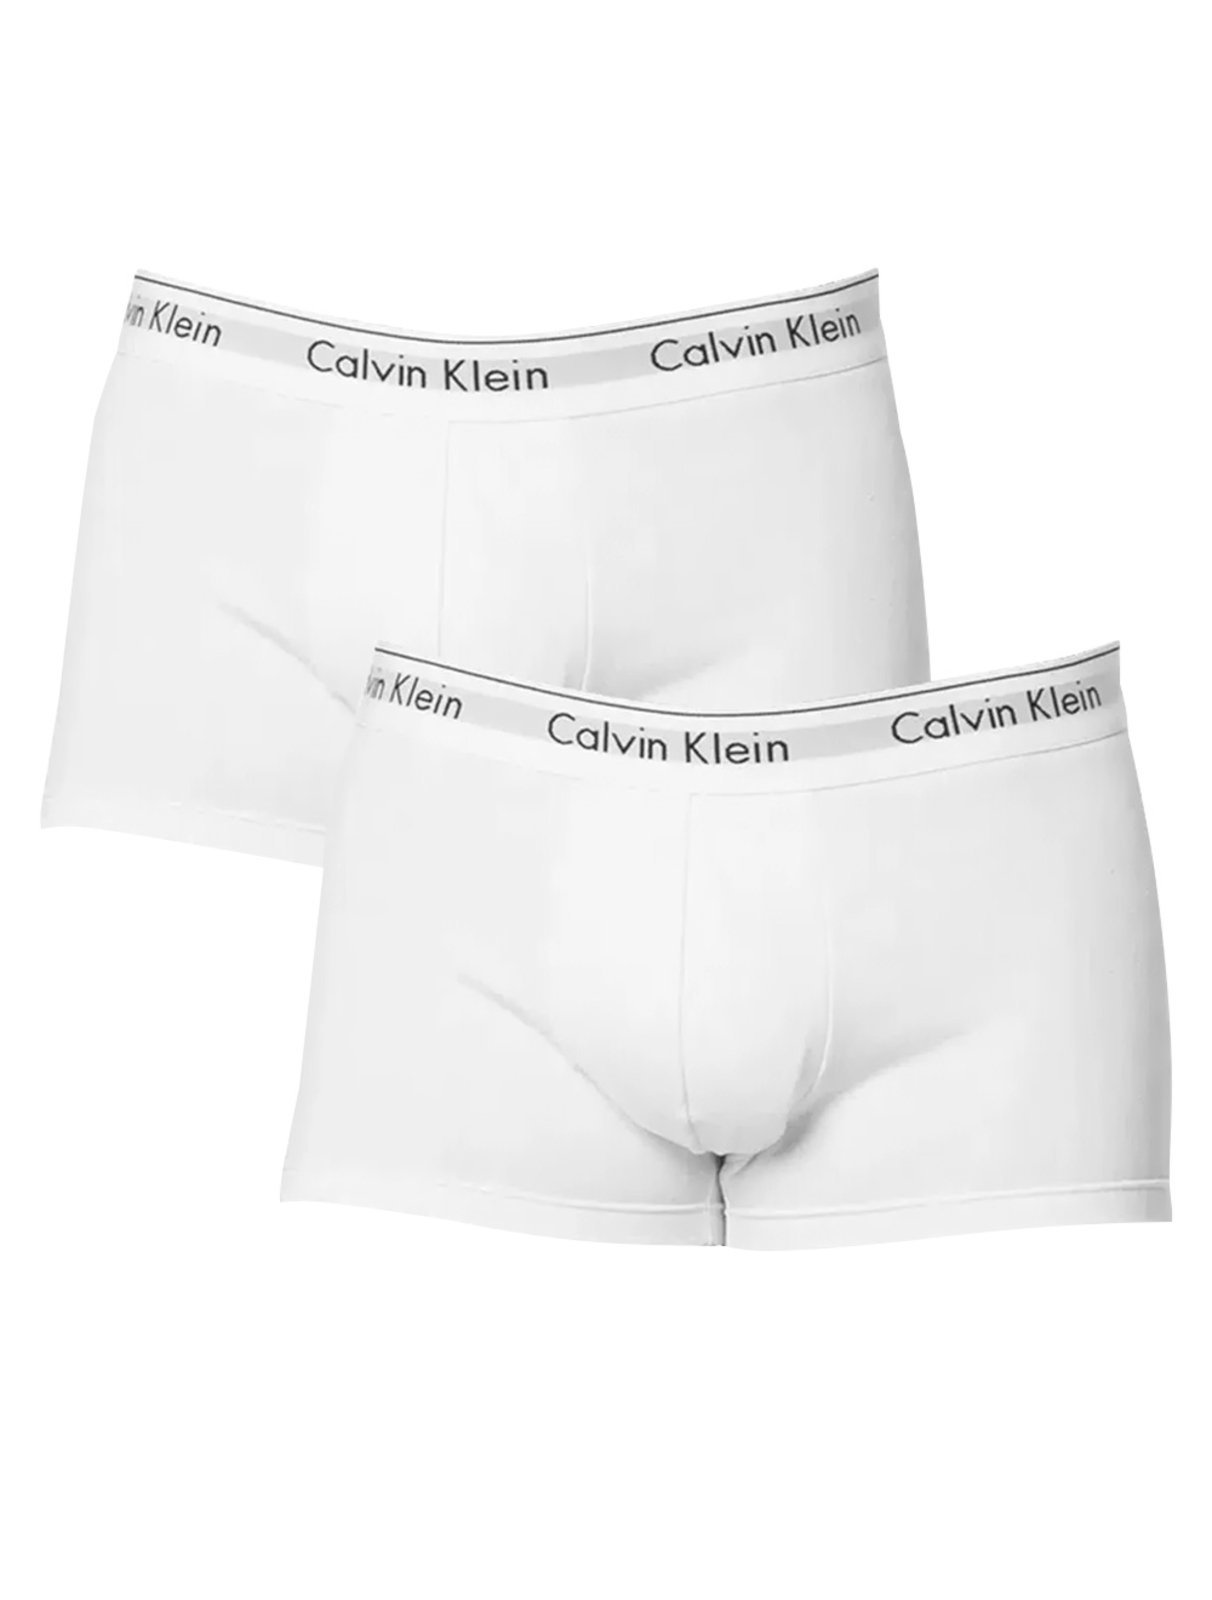 https://static.dafiti.com.br/p/Calvin-Klein-Cuecas-Calvin-Klein-Trunk-Modern-Cotton-Branca-Pack-2UN-9046-62551731-1-zoom.jpg